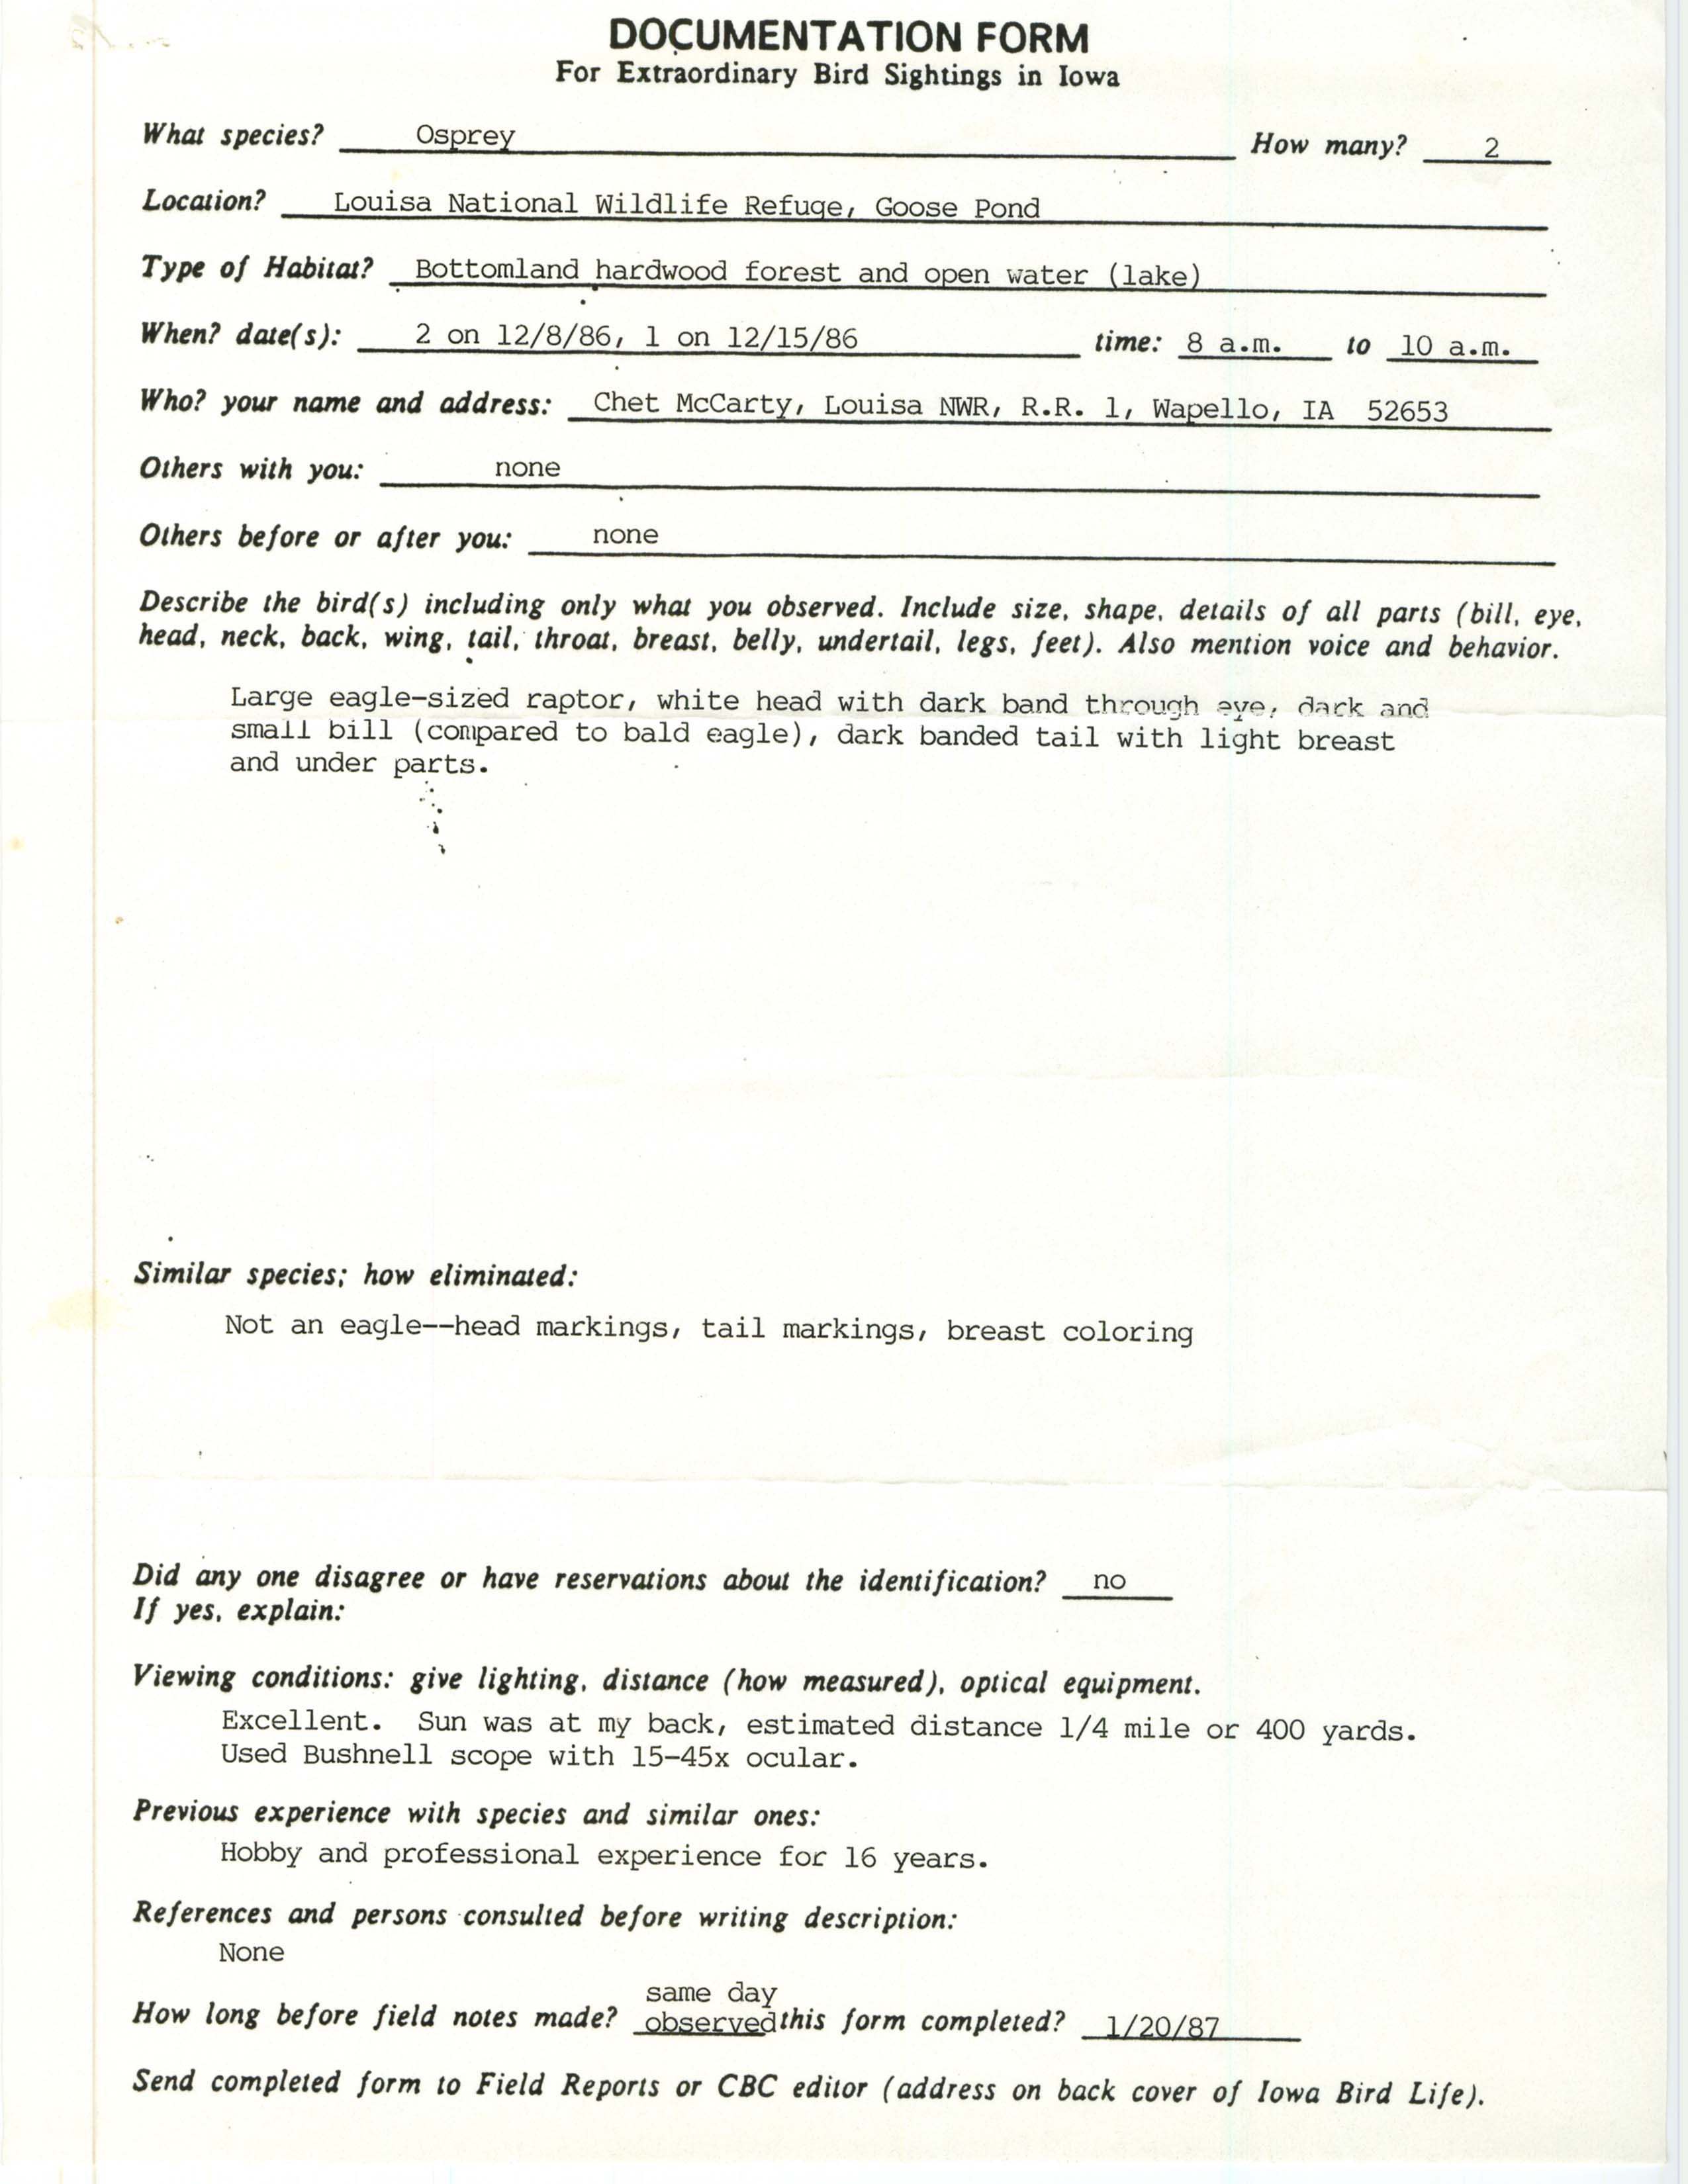 Rare bird documentation form for Osprey at Goose Pond at Louisa National Wildlife Refuge in 1986